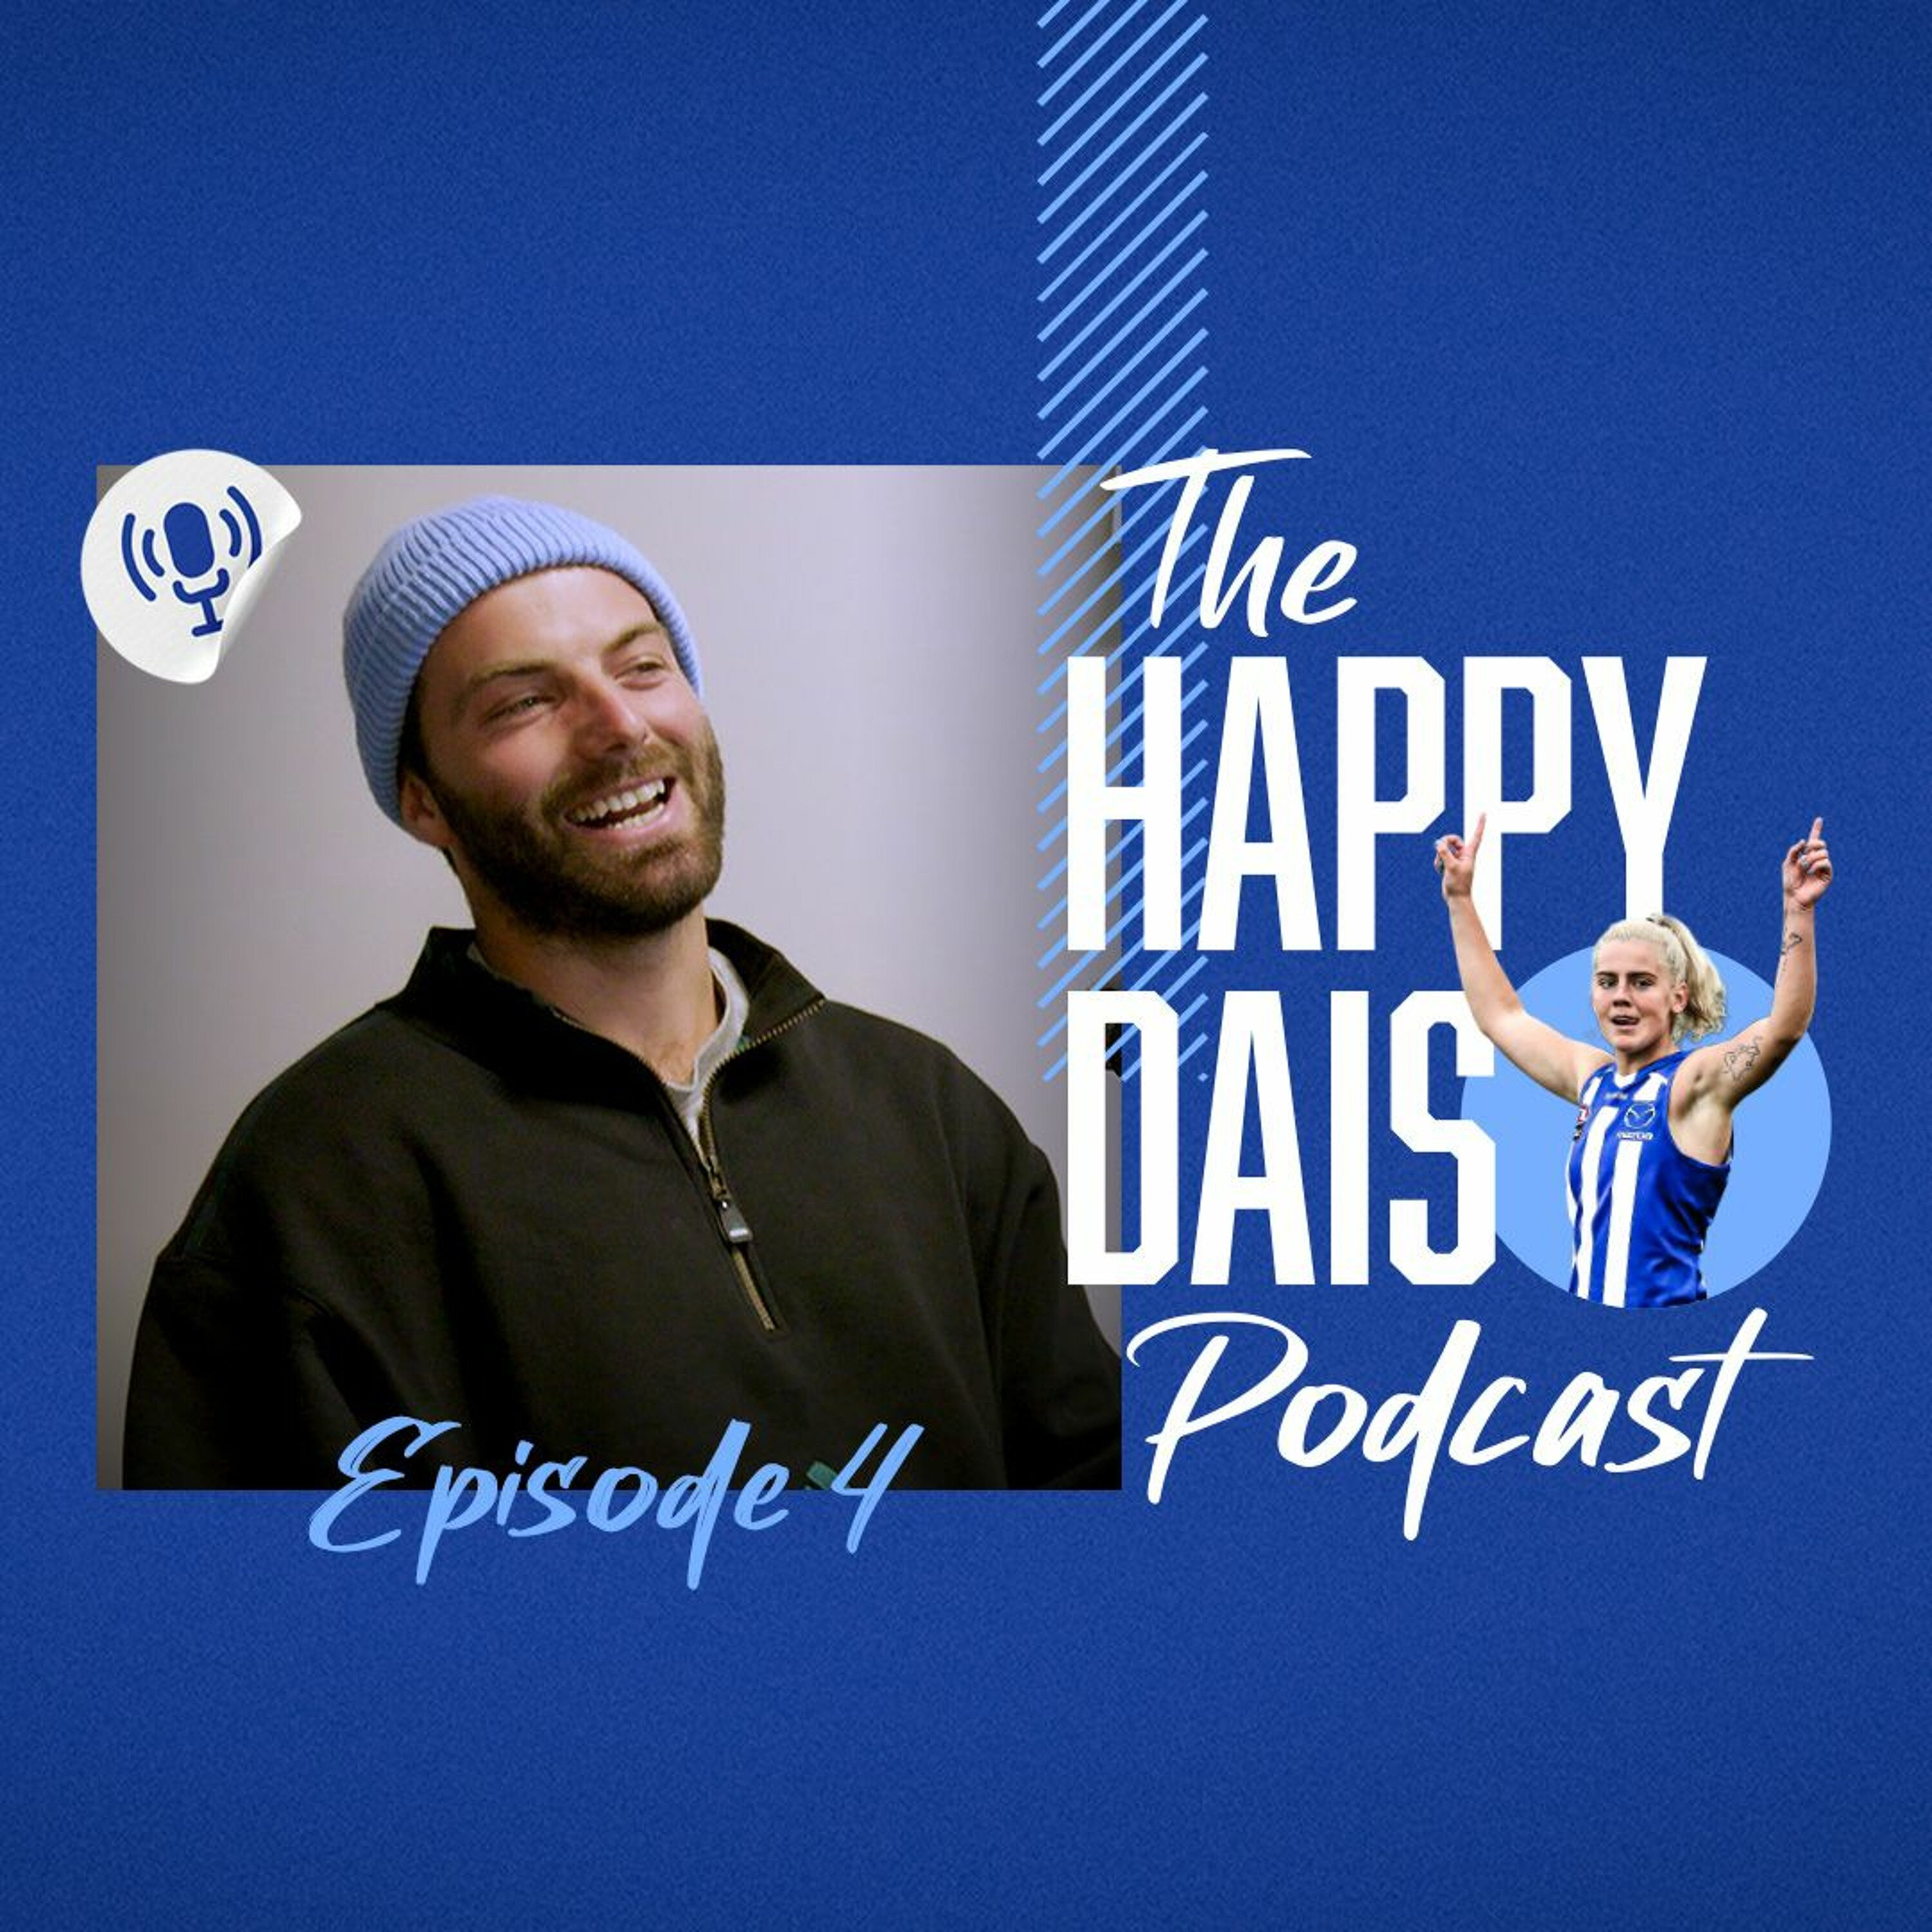 Luke McDonald and Daisy Bateman (Episode 4 - ‘Happy Dais’ Podcast)